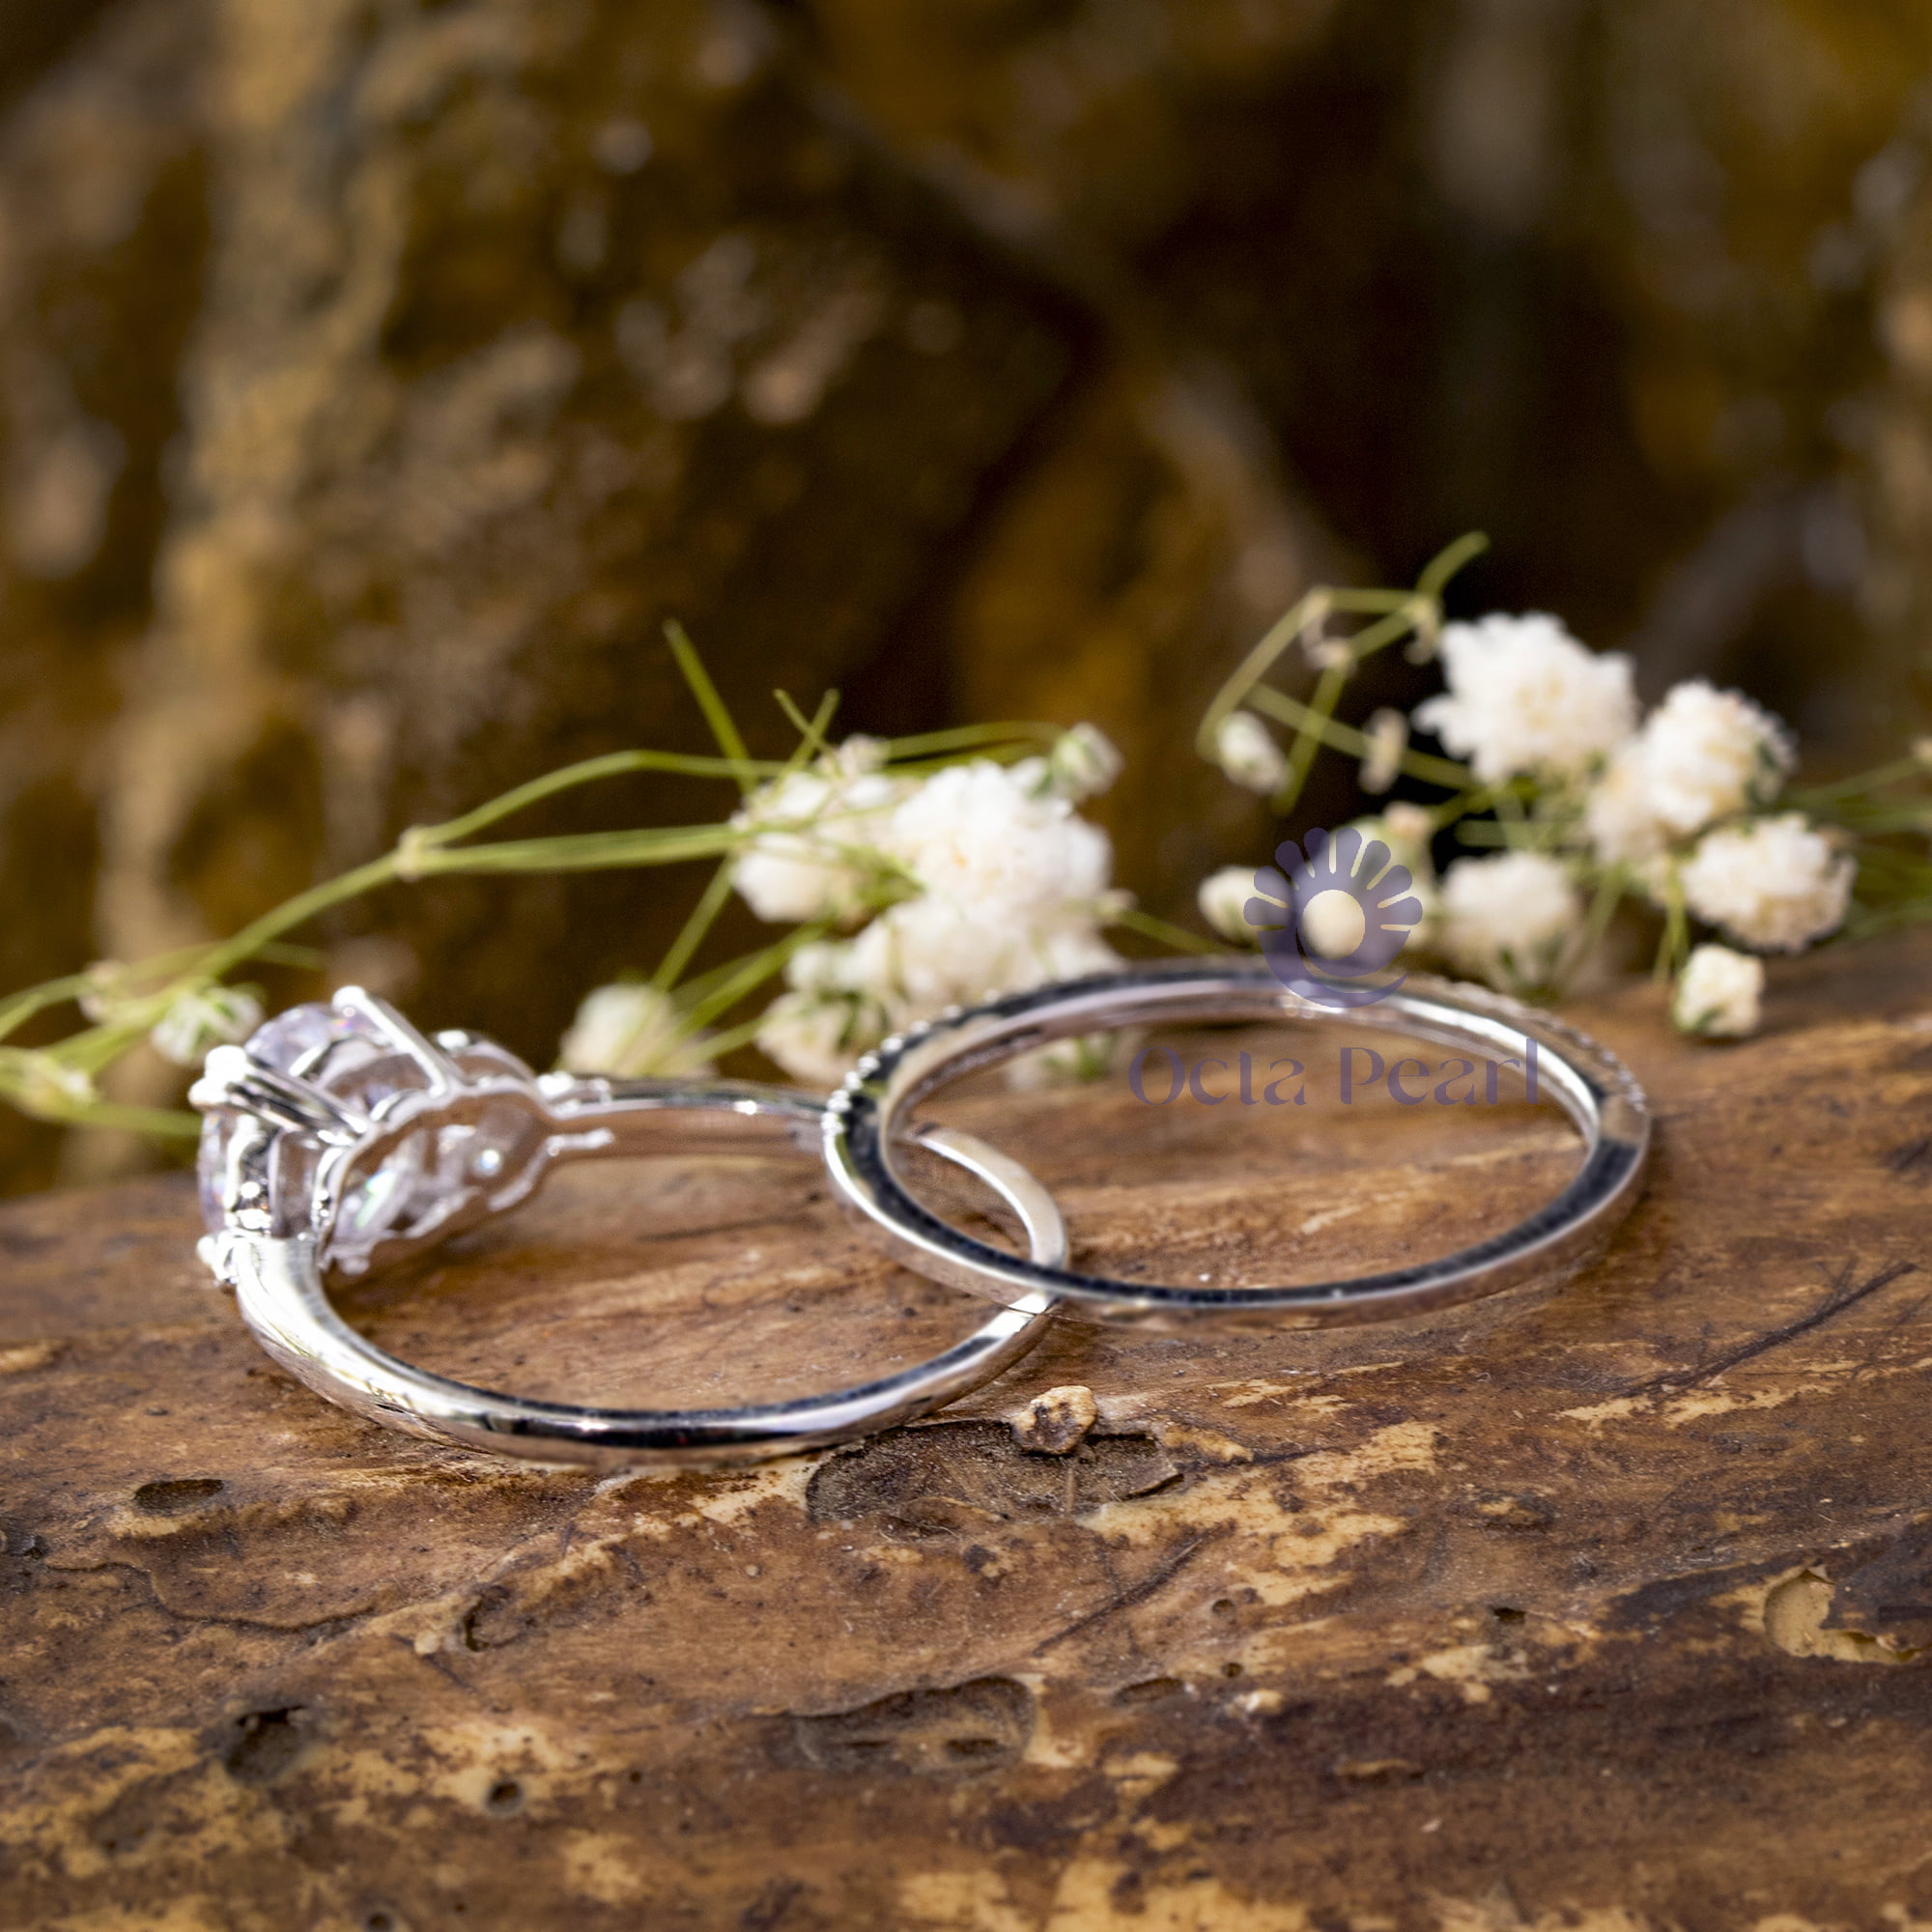 Round Cut Moissanite Milgrain Leaf Motif Wedding Engagement Ring Set For Bride ( 2 4/9 TCW)